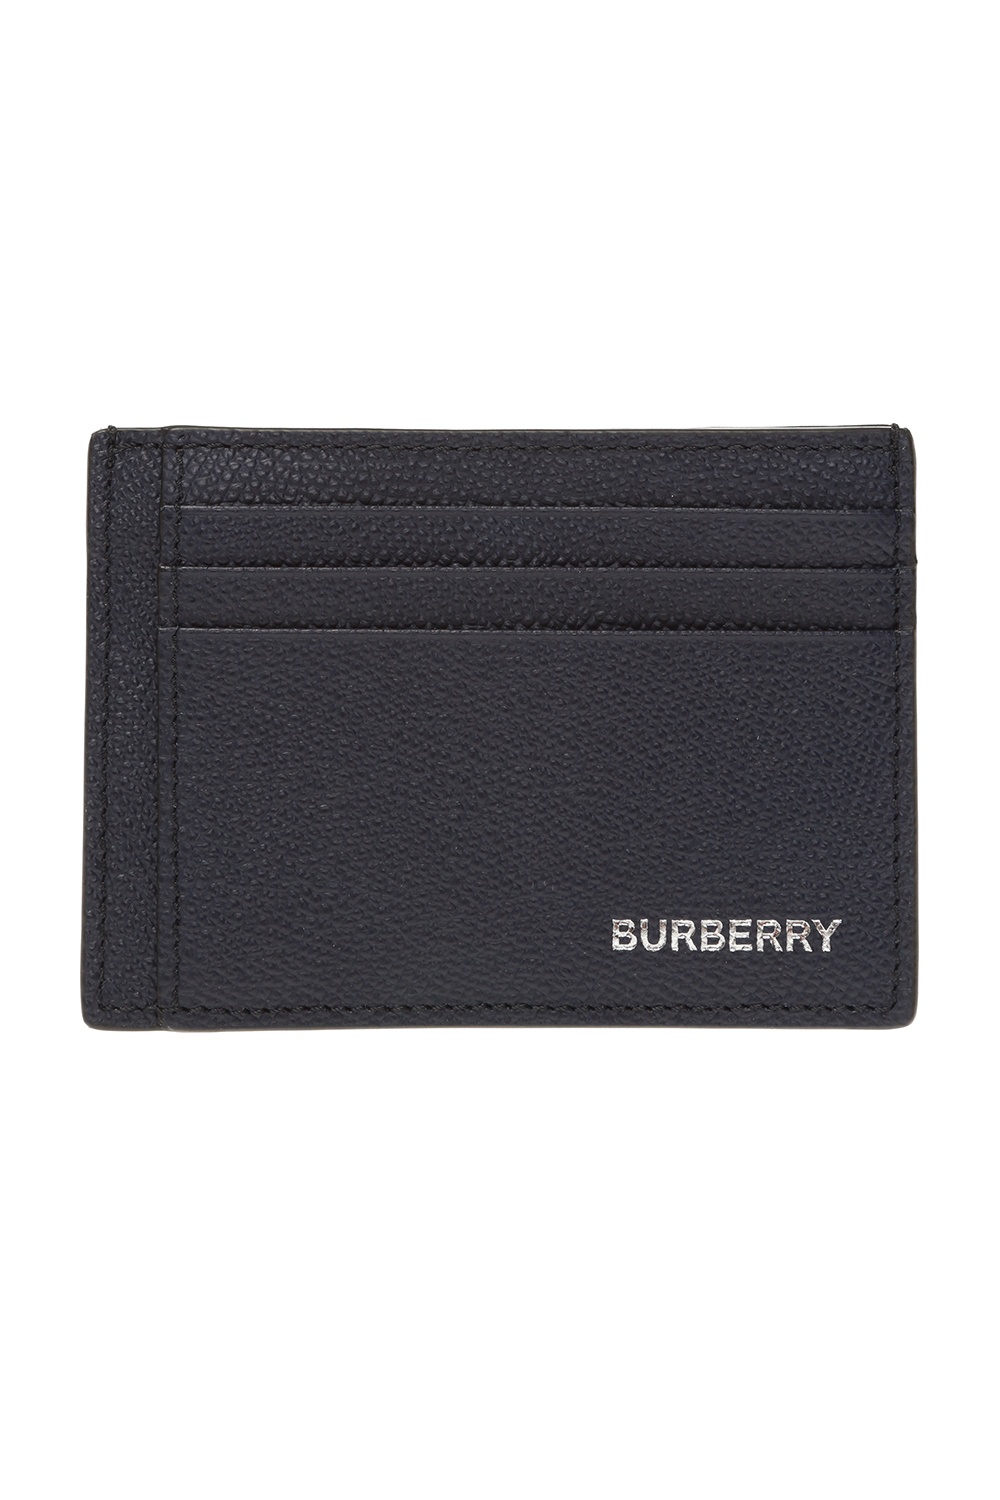 Burberry Card case with money clip | Men's Accessories | Vitkac